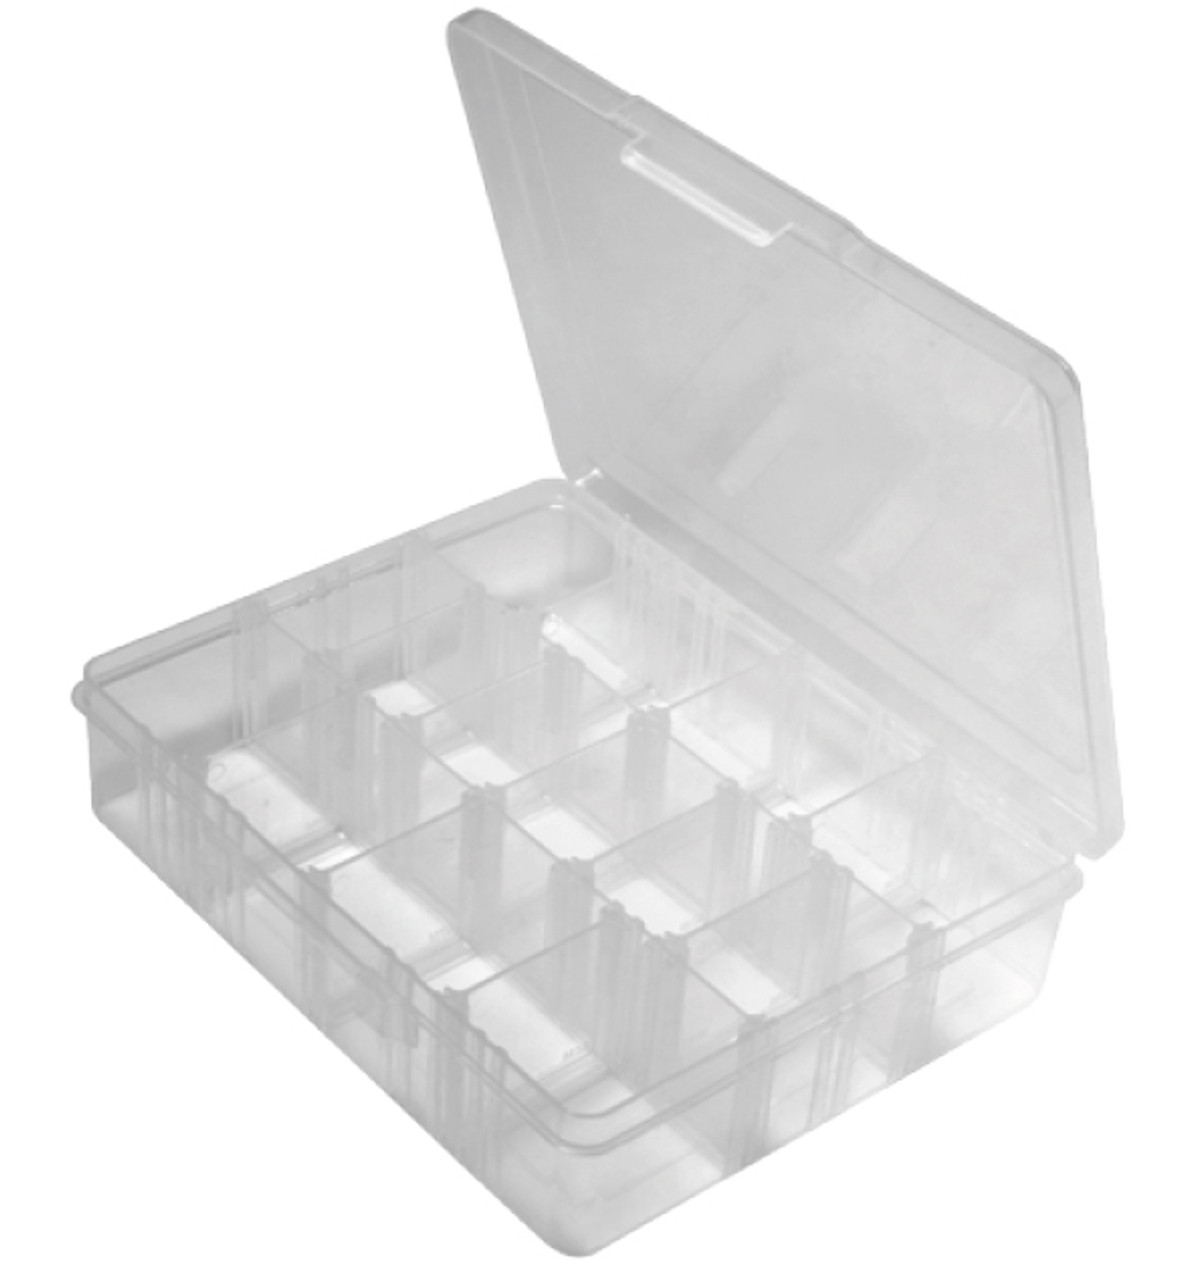  Qualsen Plastic Compartment Box with Adjustable